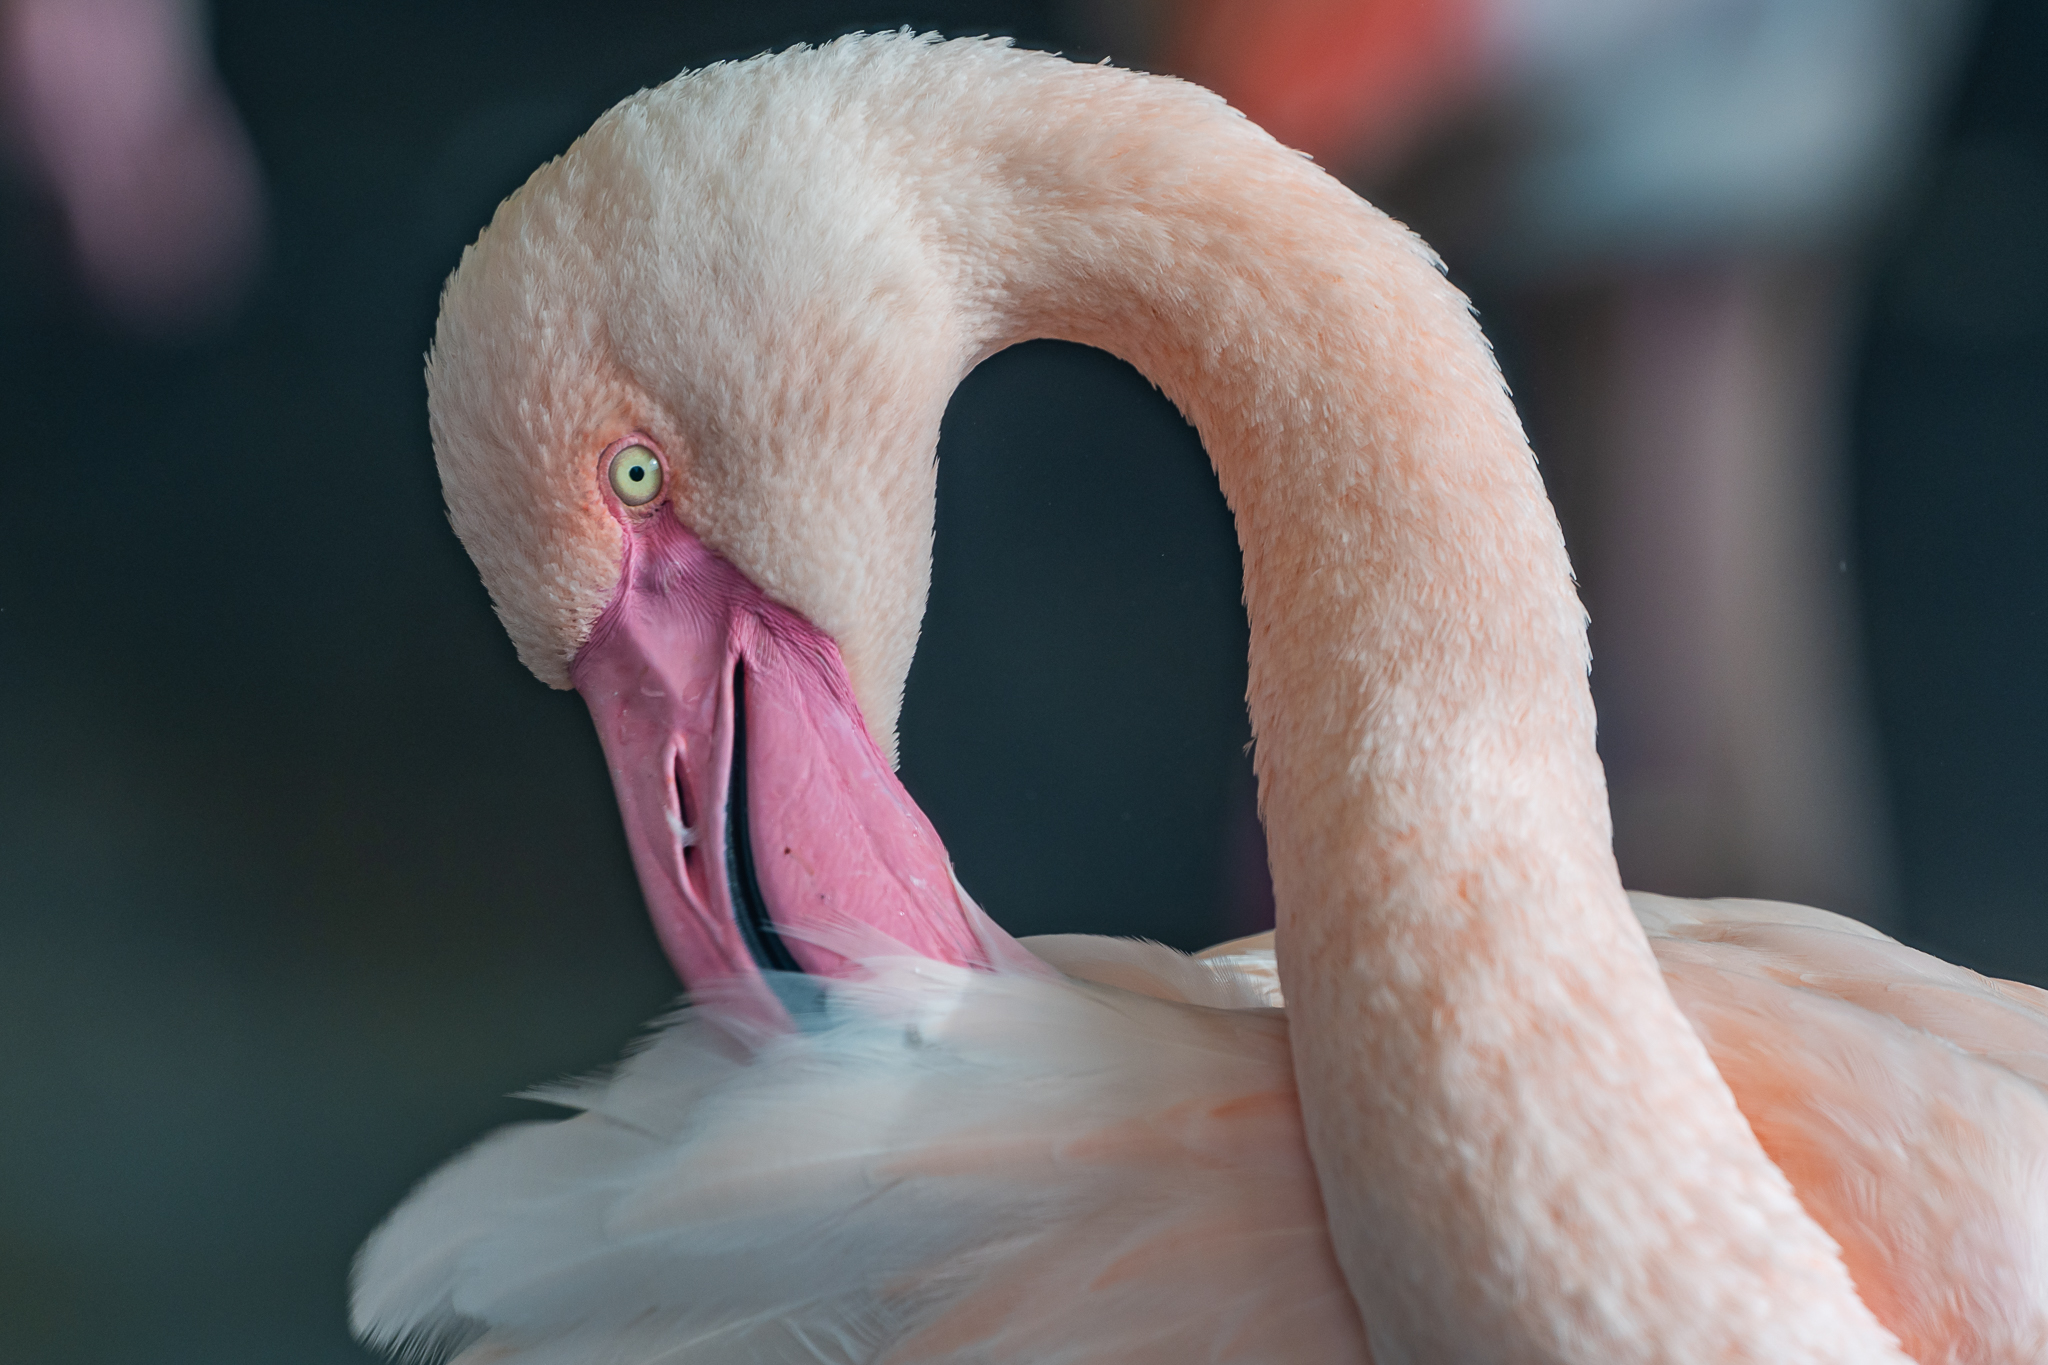 Flamingo

#sony #ilce6700 #sonyphotography #tamron70180 #photooftheday #nature #naturephotography #zoofotografie #animals #zooanimalsofinstagram #tierpark #animalphotography #zooanimal #wildpark #zoophoto #fotografie #zoo #tierliebe #einhesseunterwegs #tierfotografie #naturliebe #naturschönheit #tierparkbochum #bochum #flamingo